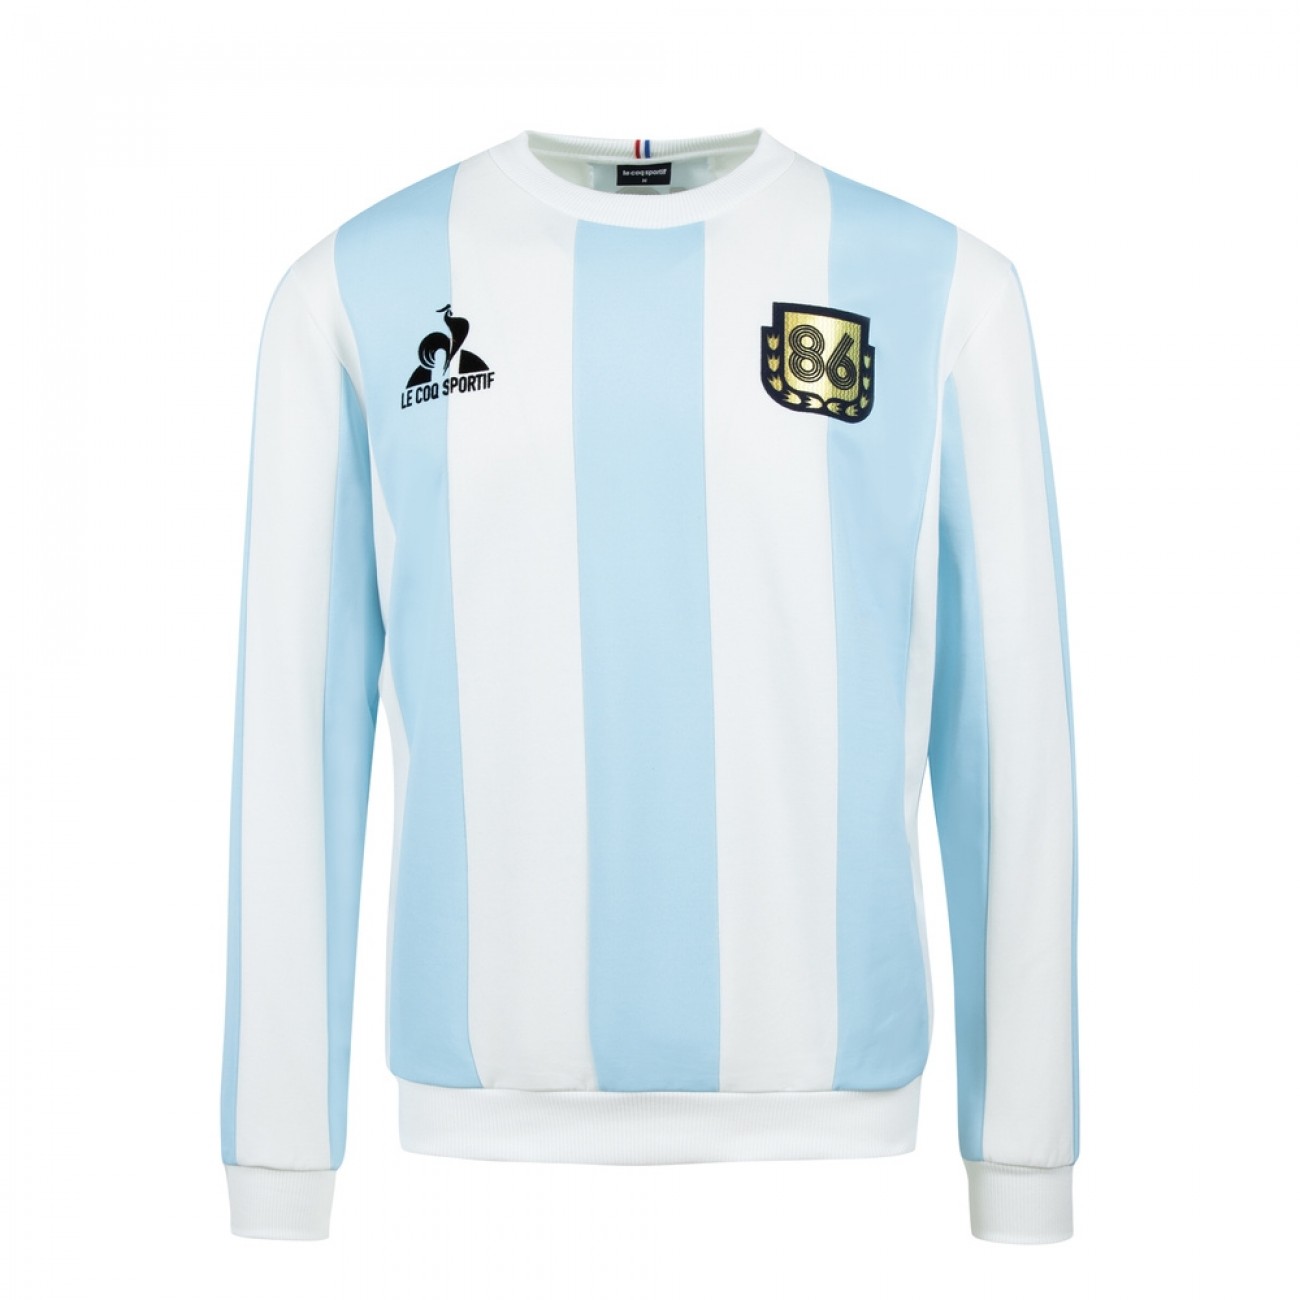 Camiseta Argentina Maradona 1986